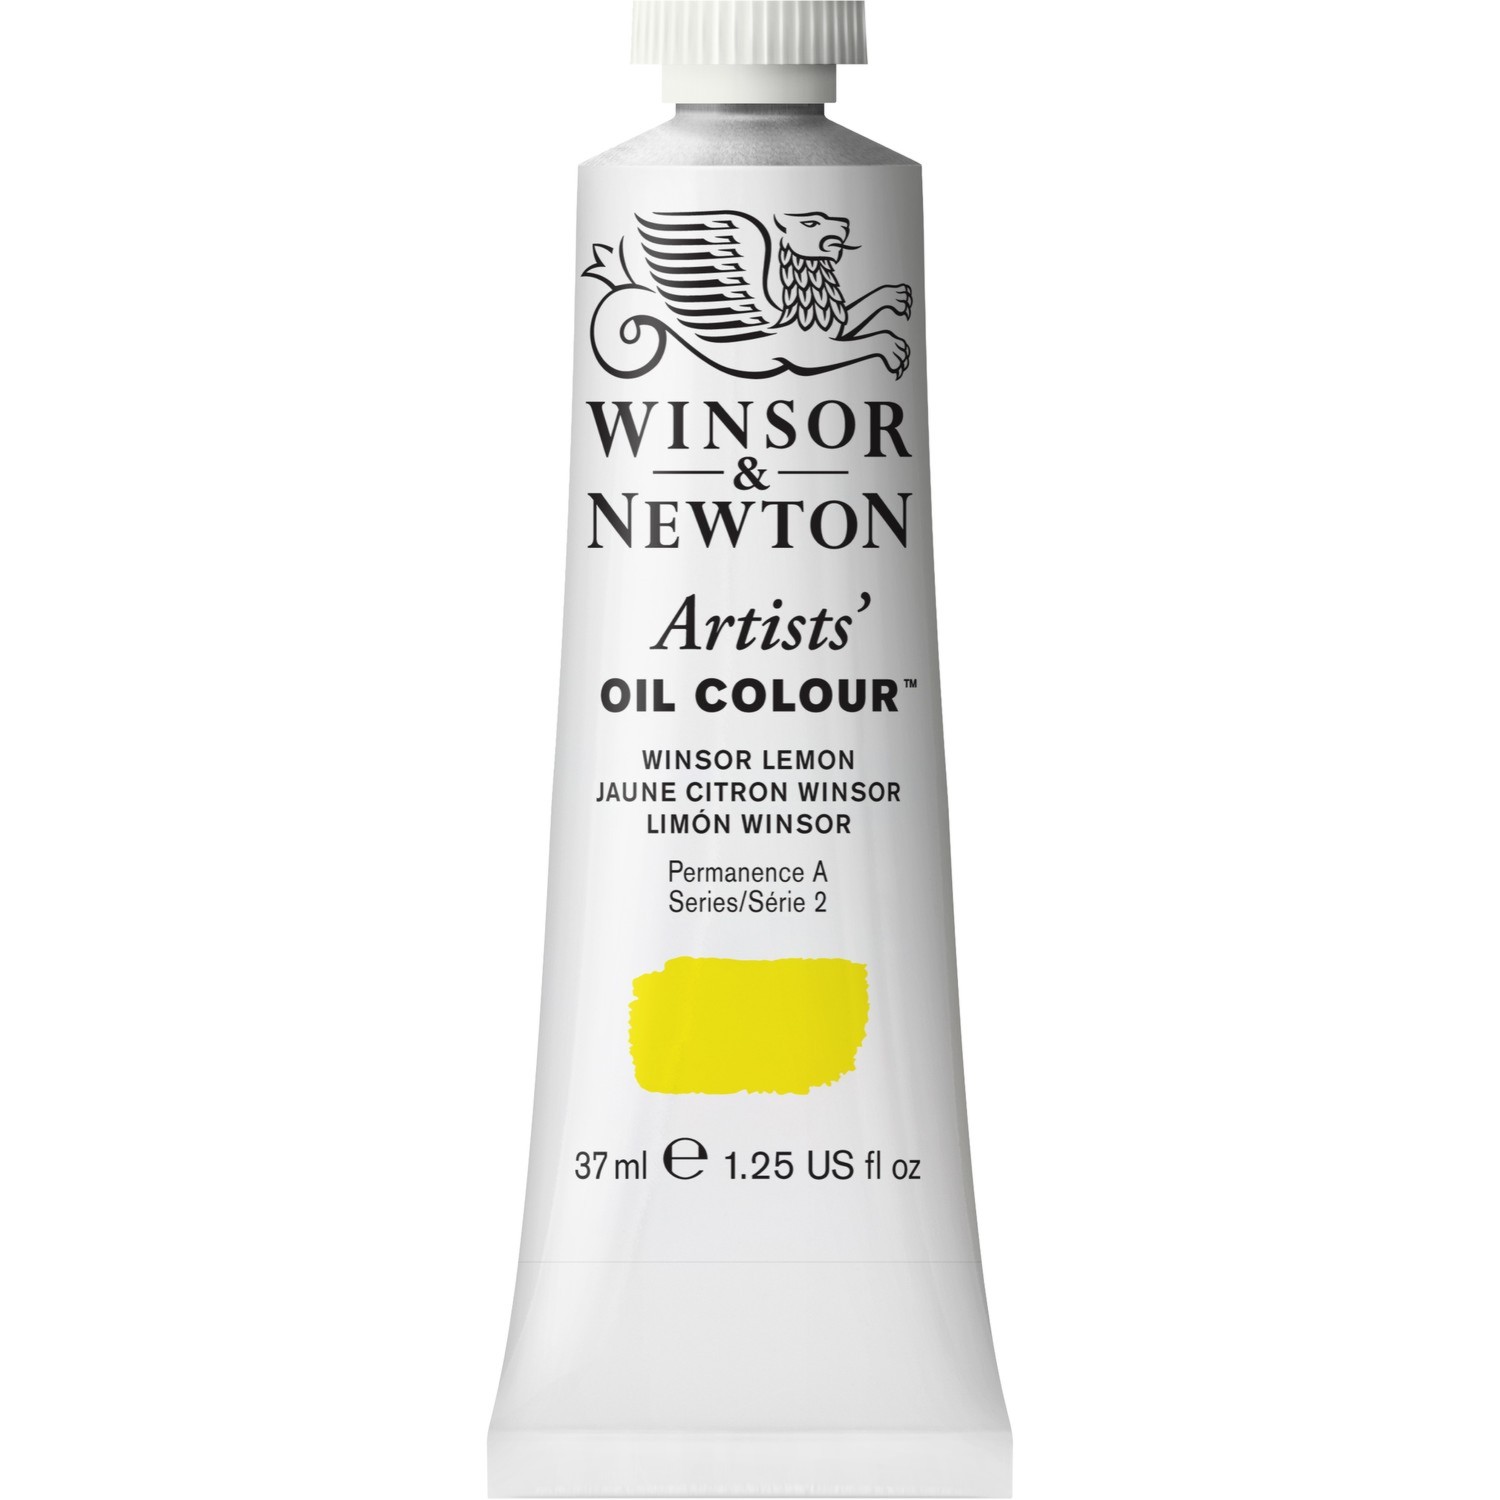 Winsor and Newton 37ml Artists' Oil Colours - Winsor Lemon Image 1